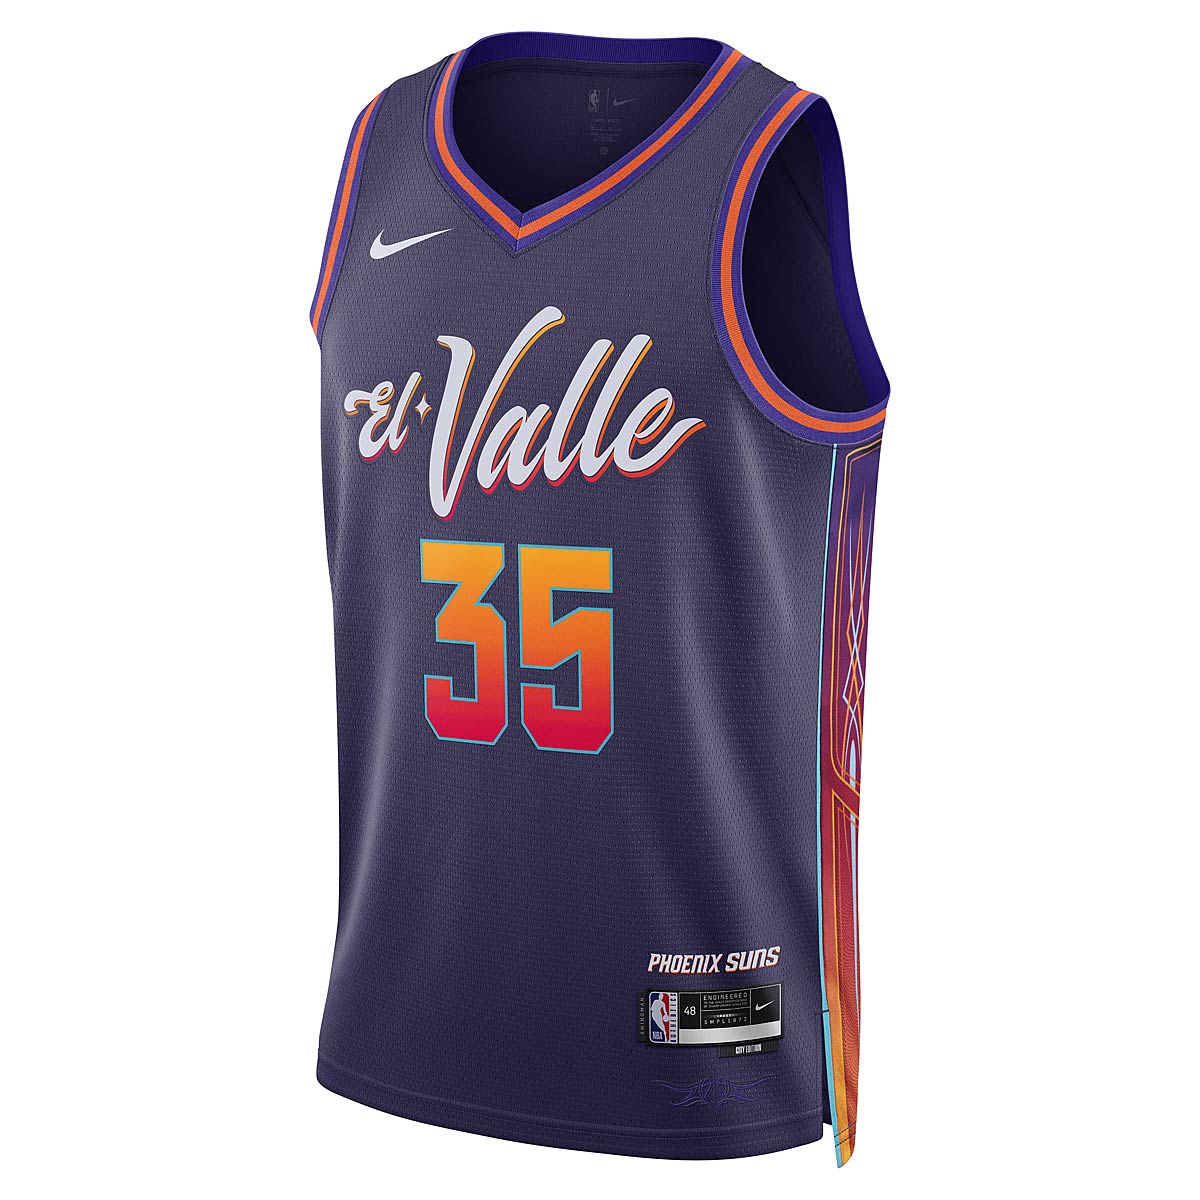 Nike NBA Phoenix Suns Dri-fit City Edition Swingman Jersey Kevin Durant, Ink/dark Grey Heather S